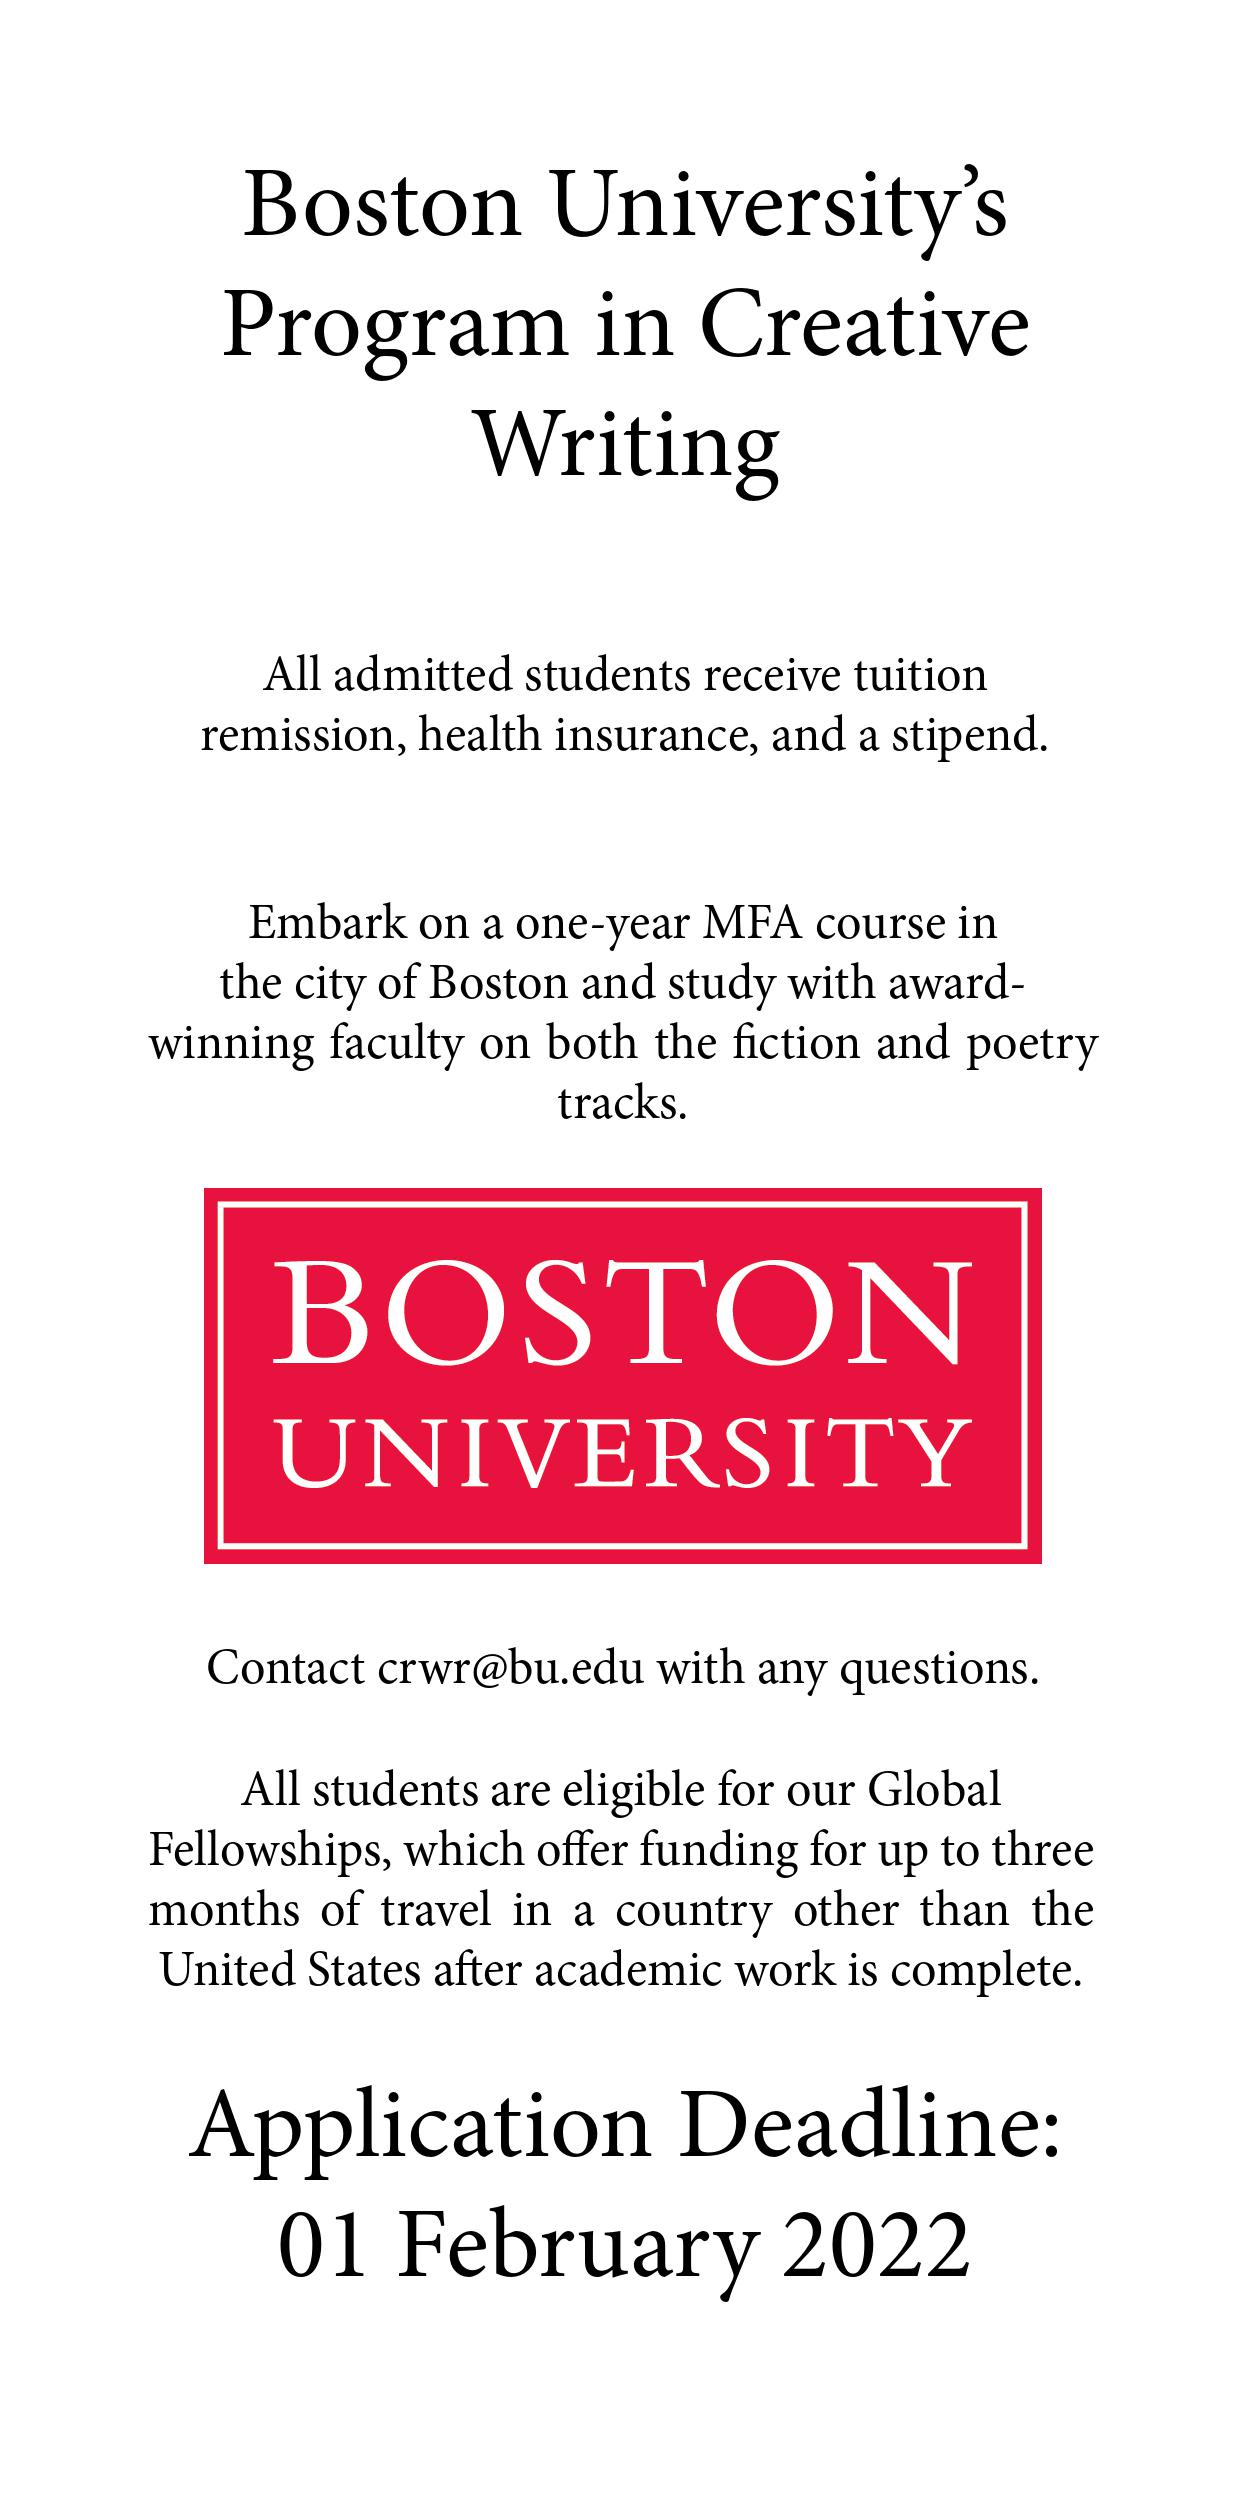 Advertisement for Boston University's program in creative writing